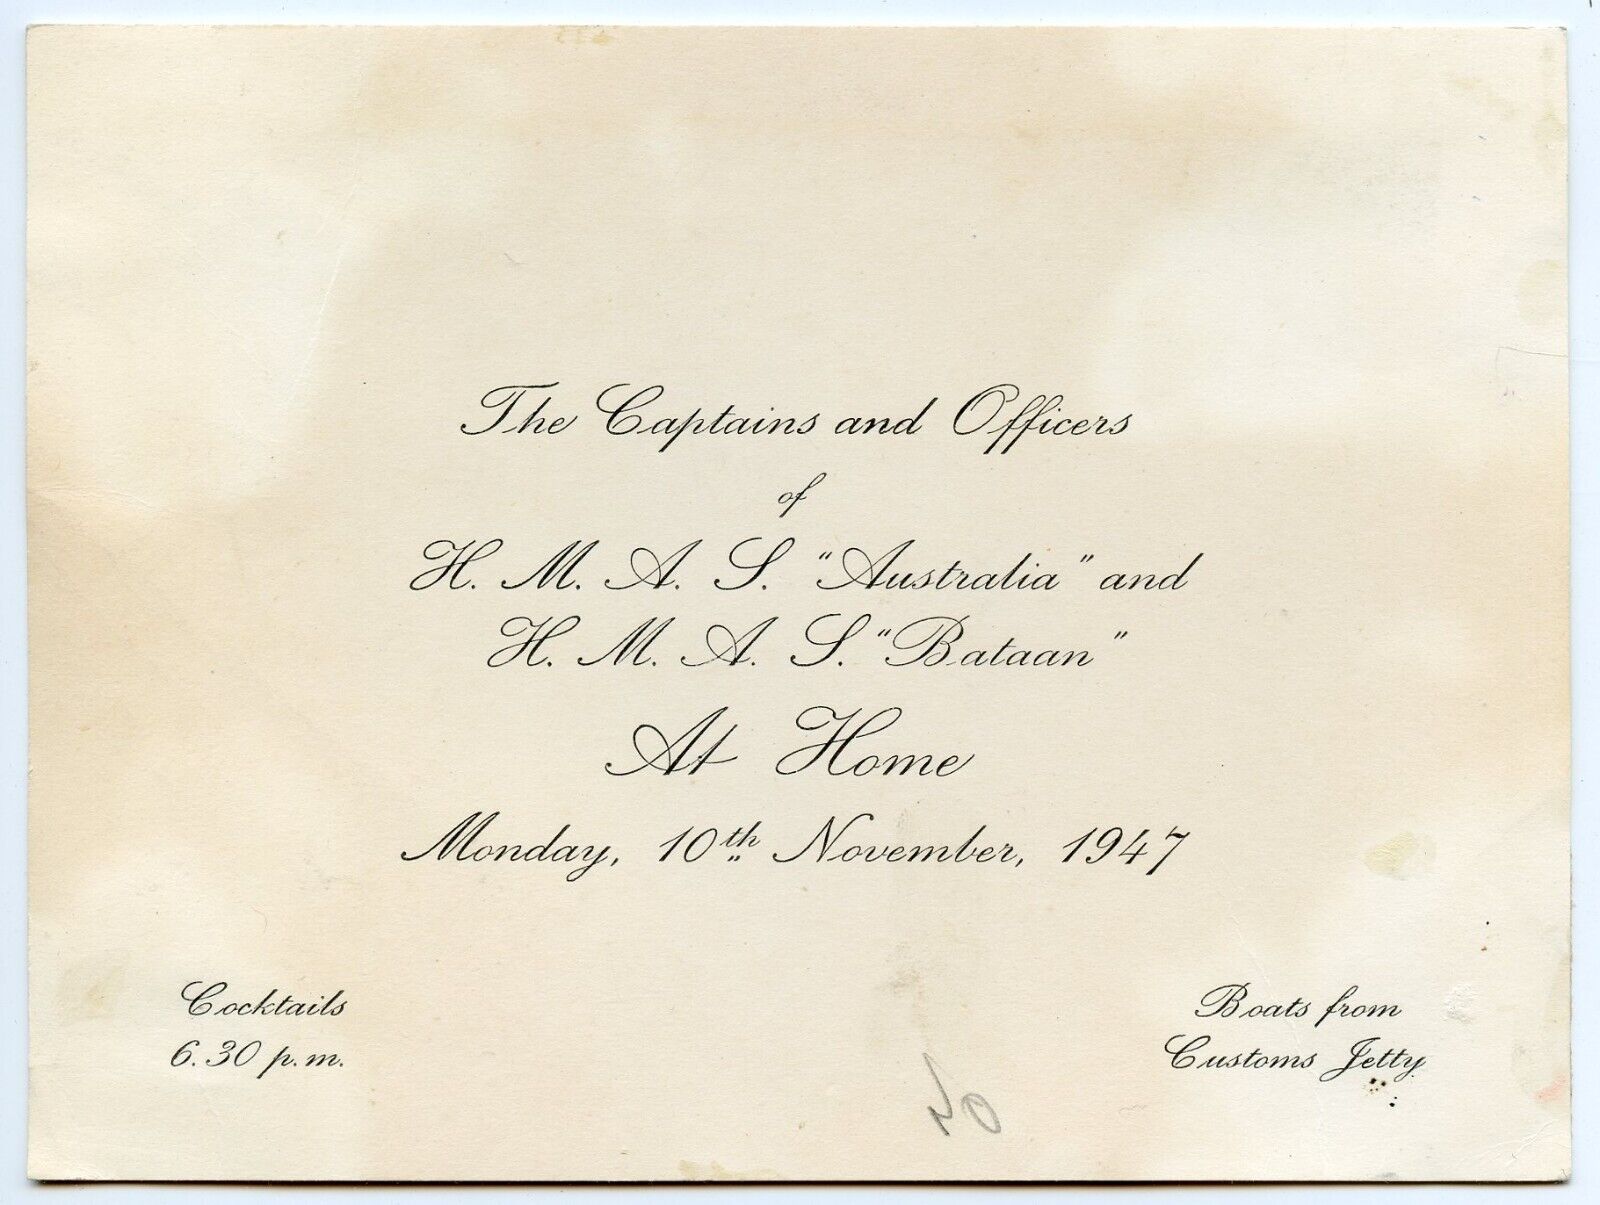 Ships Australia and Bataan invitation to Canada Consul in Shanghai China 1947